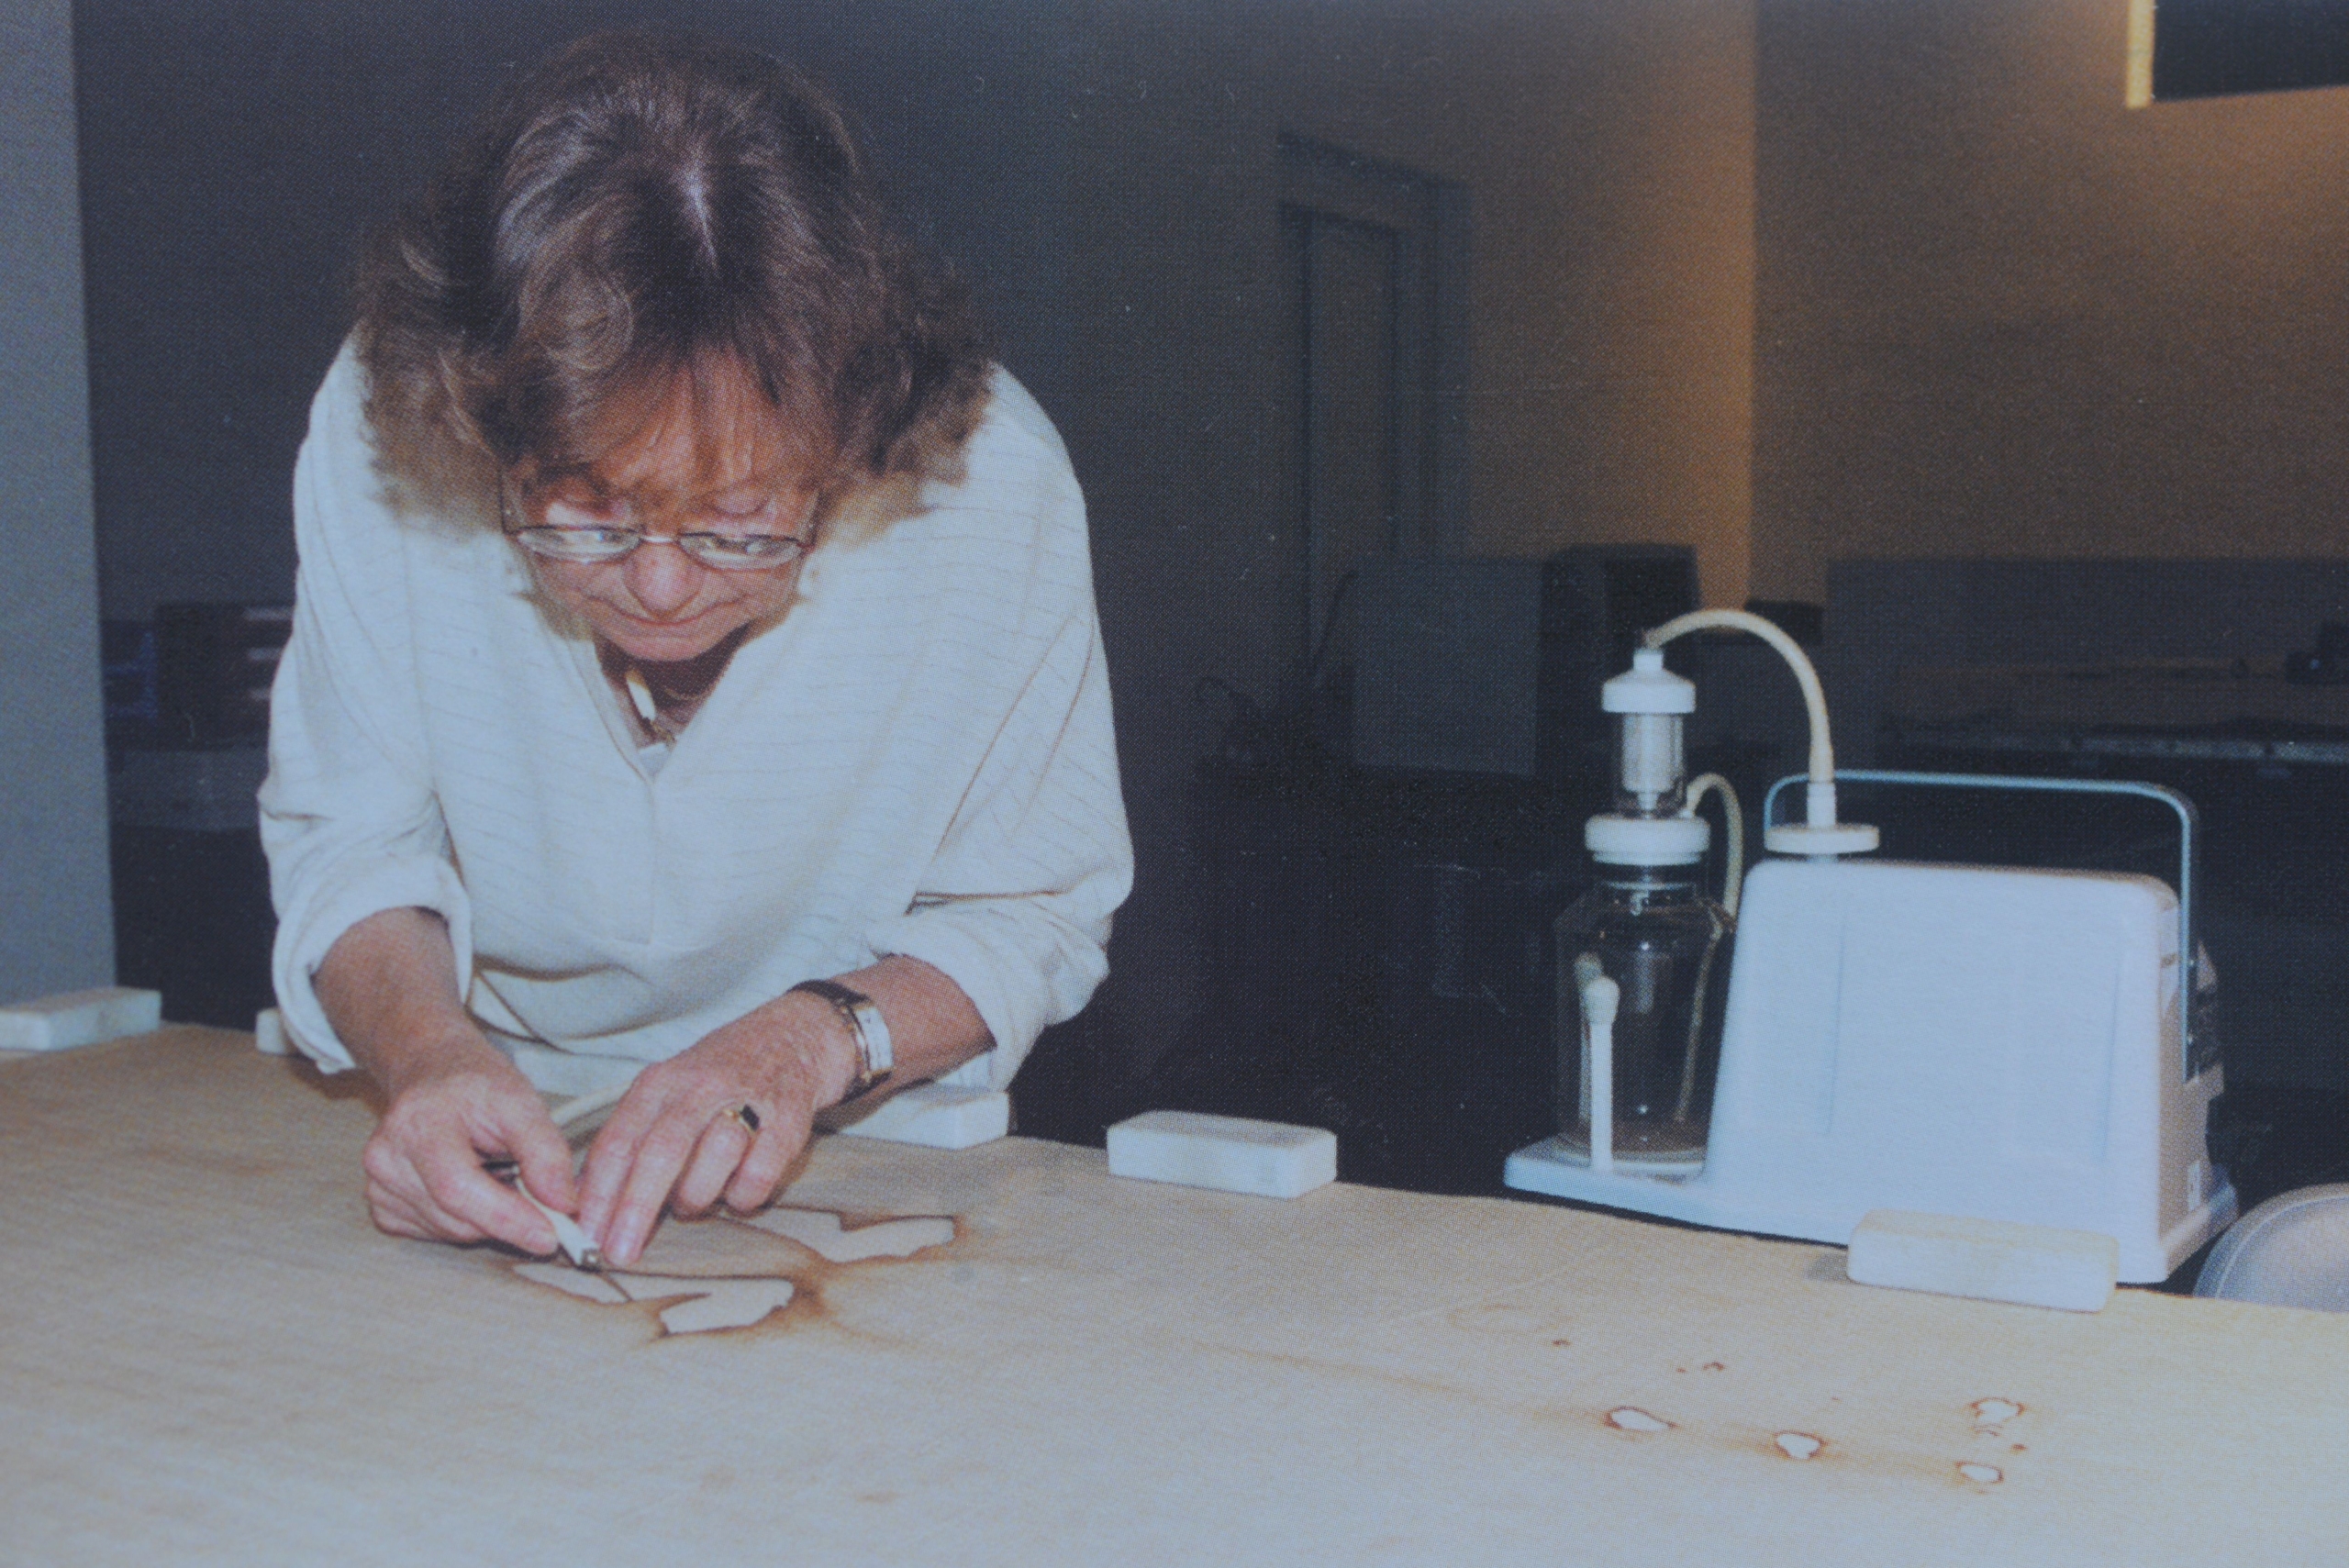 Photo A. Mechtild Flury-Lemberg during restauration Shroud 2002